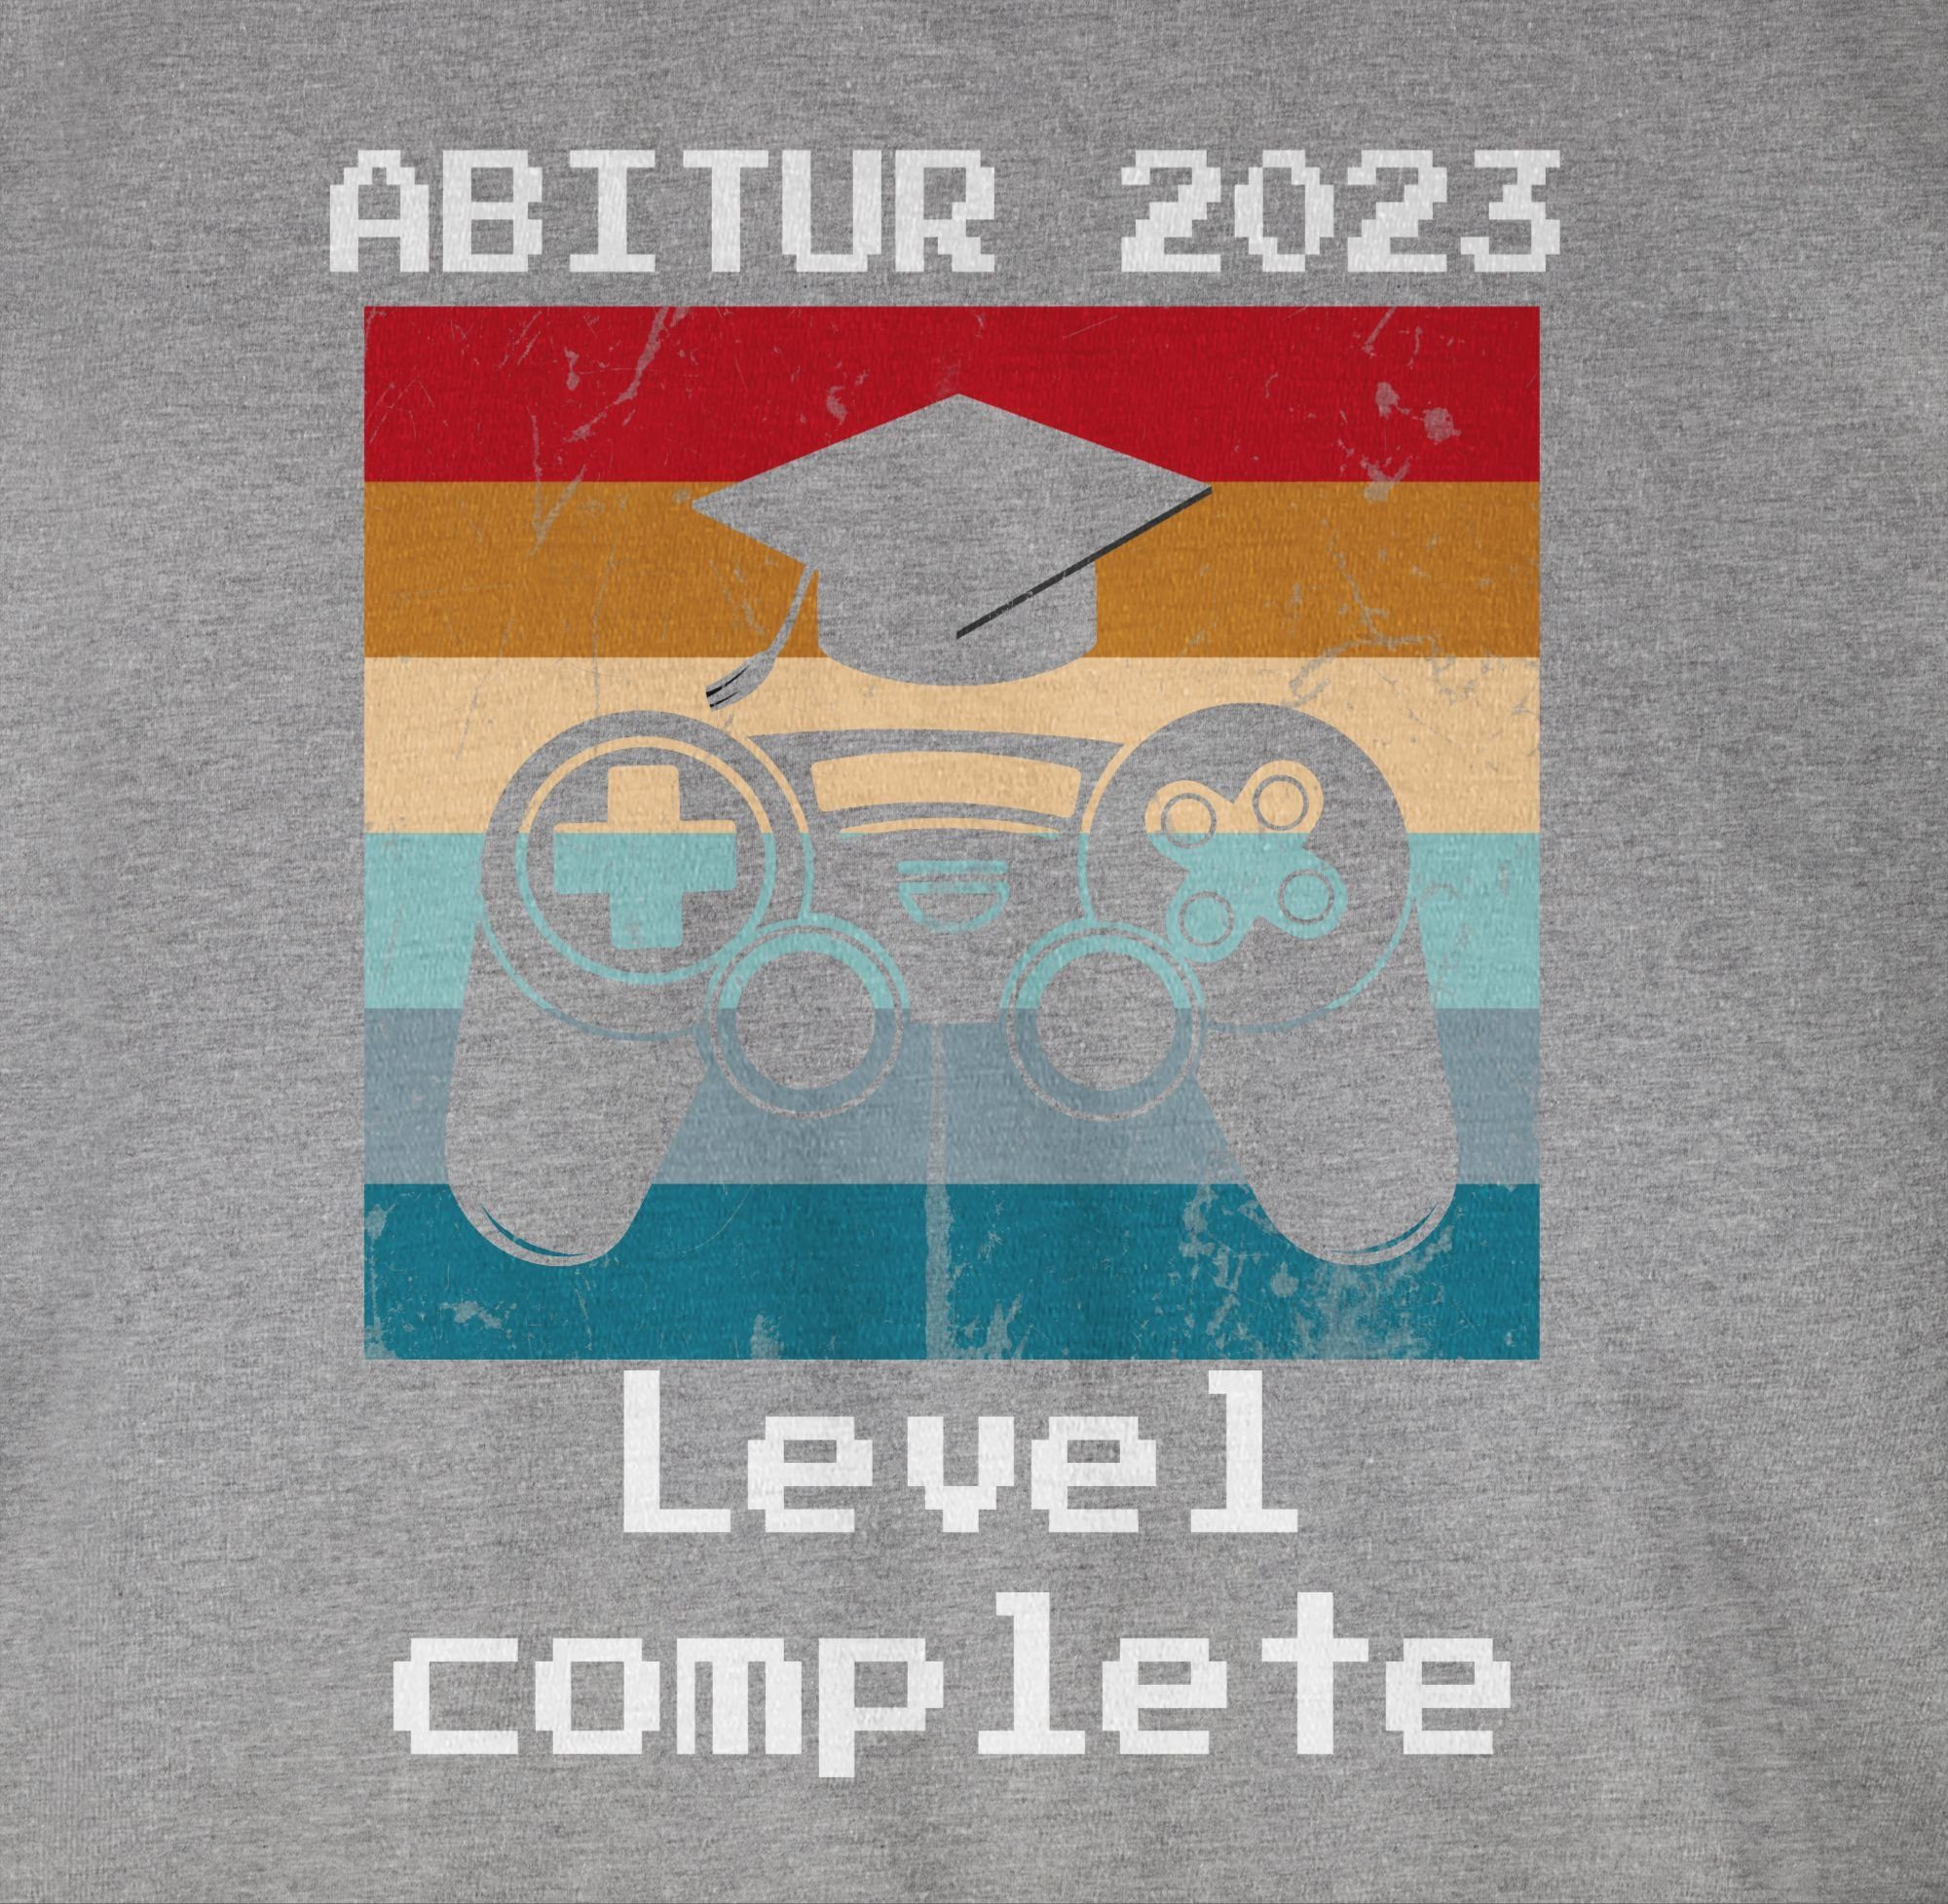 Complete Shirtracer meliert Abschluss T-Shirt 2023 2024 Abitur Level Vintage & Grau Abitur Geschenk 02